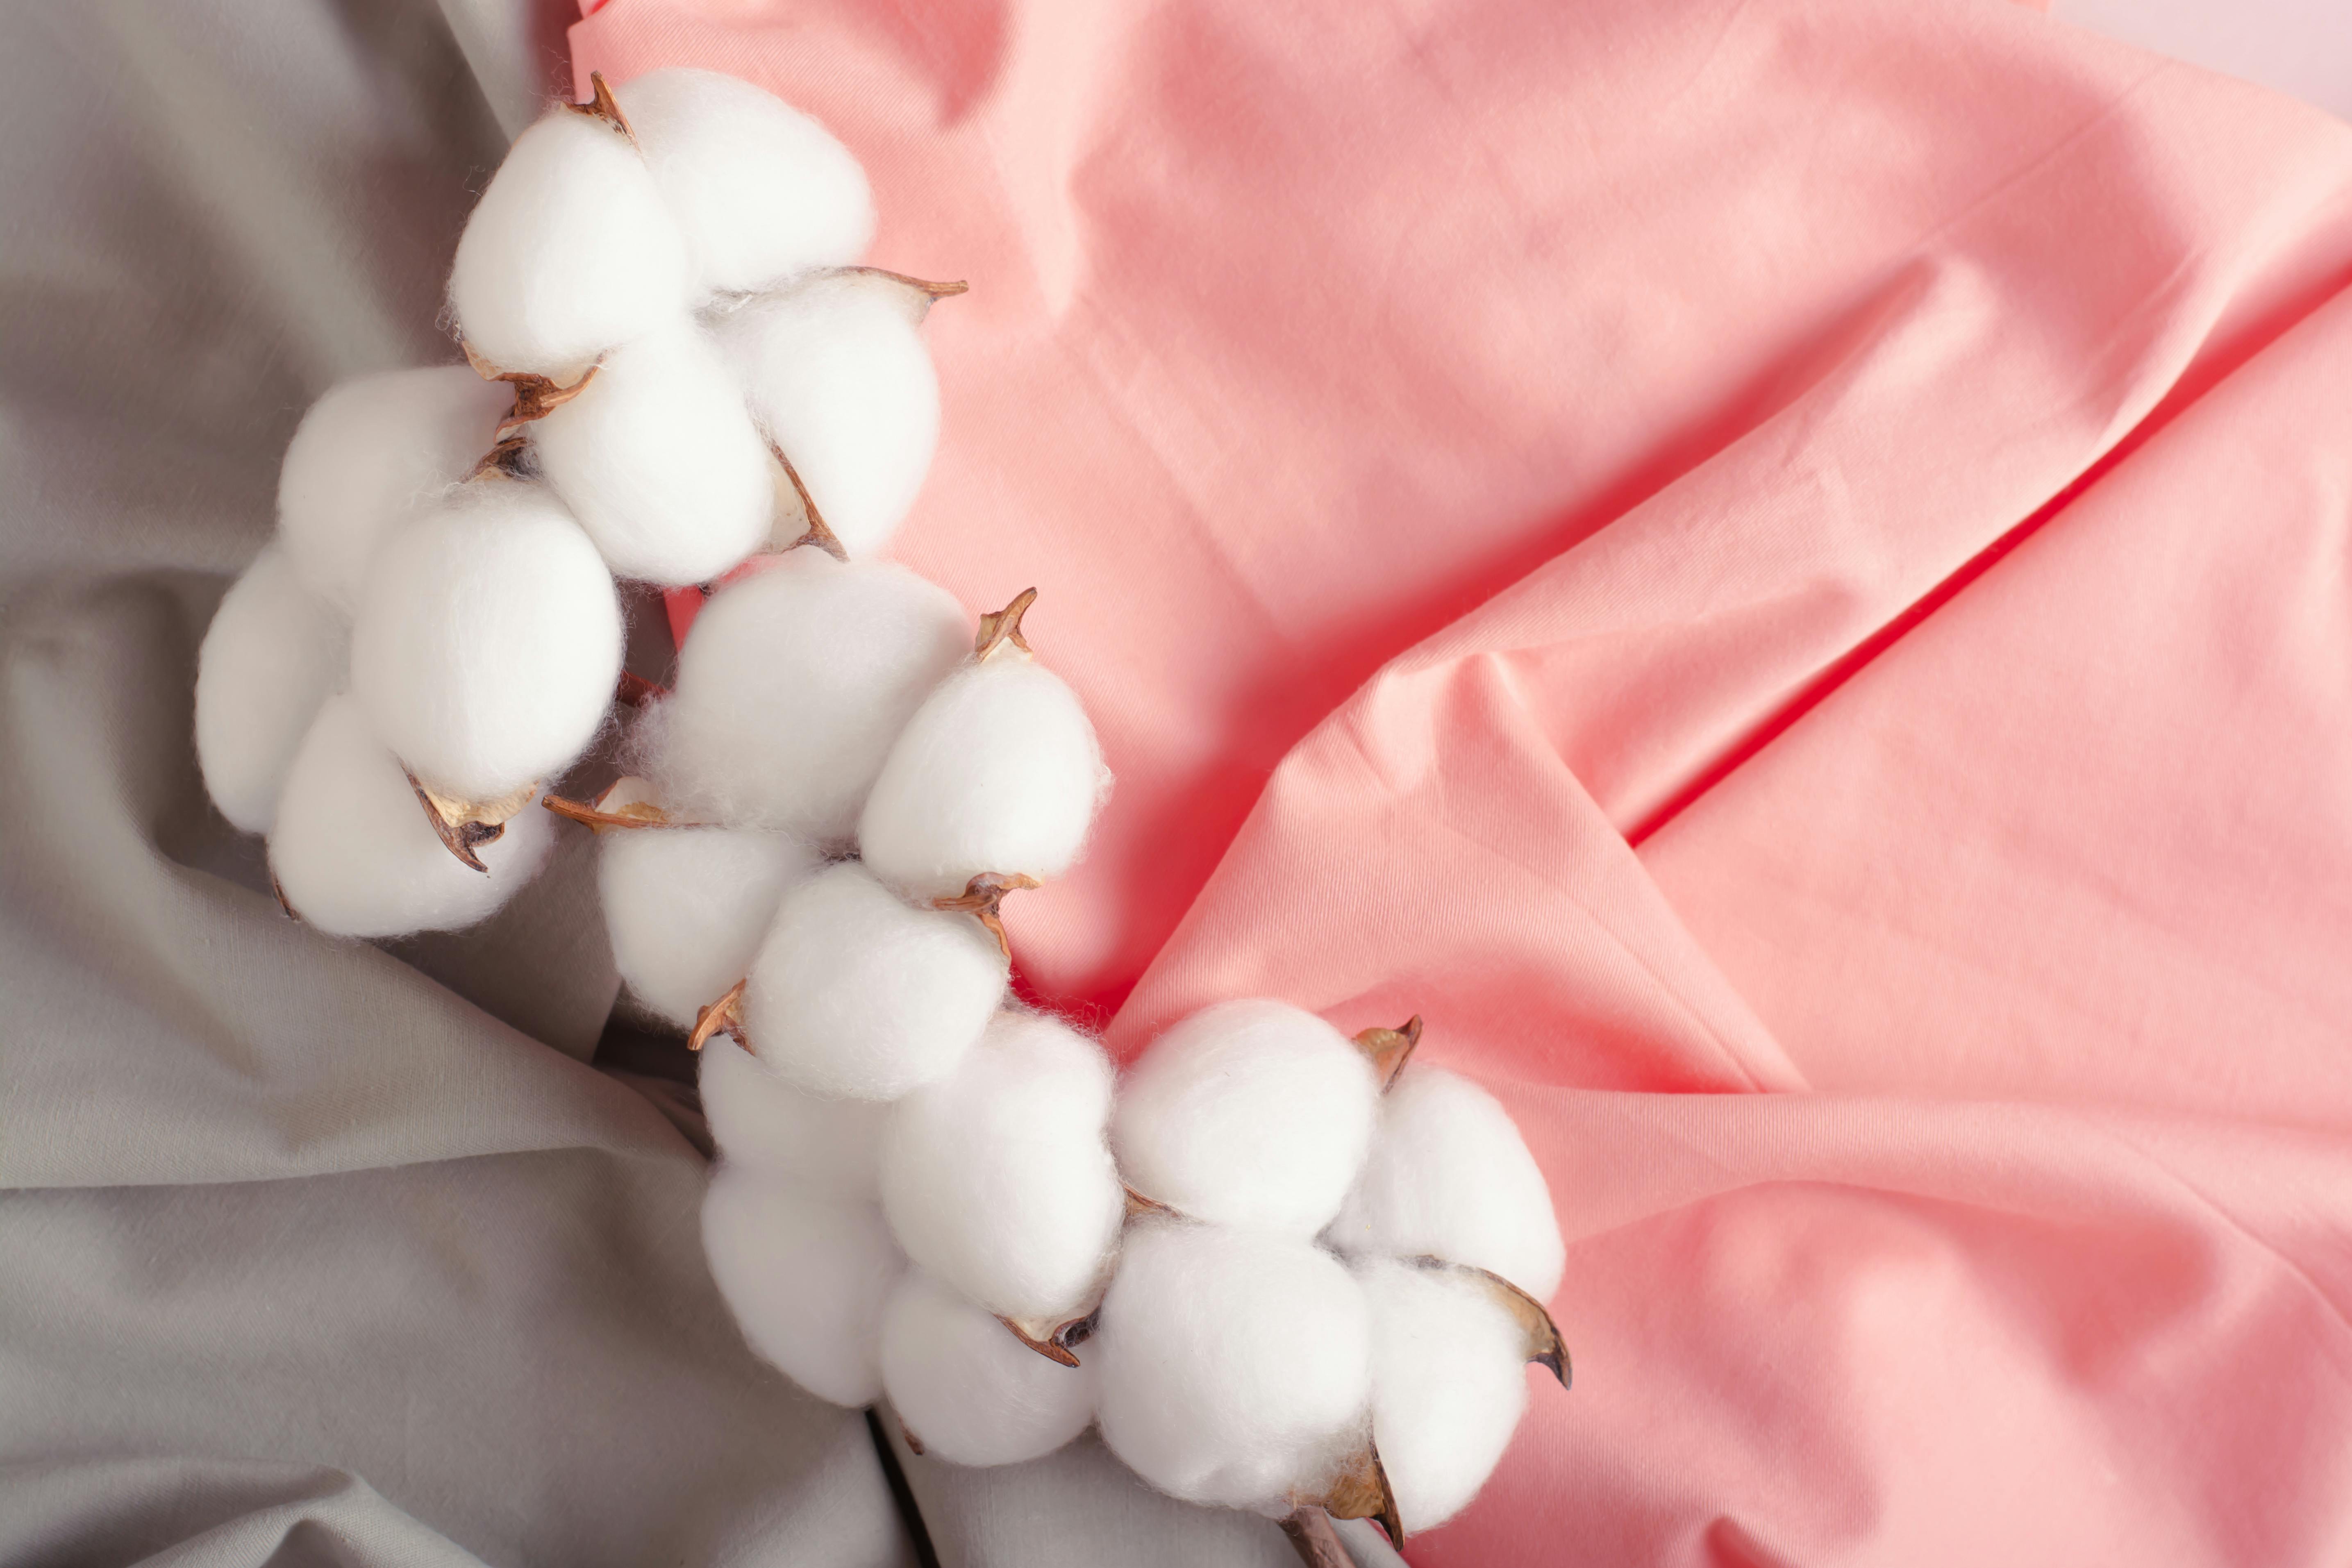 100% Cotton VS Pure Cotton – Thoppia